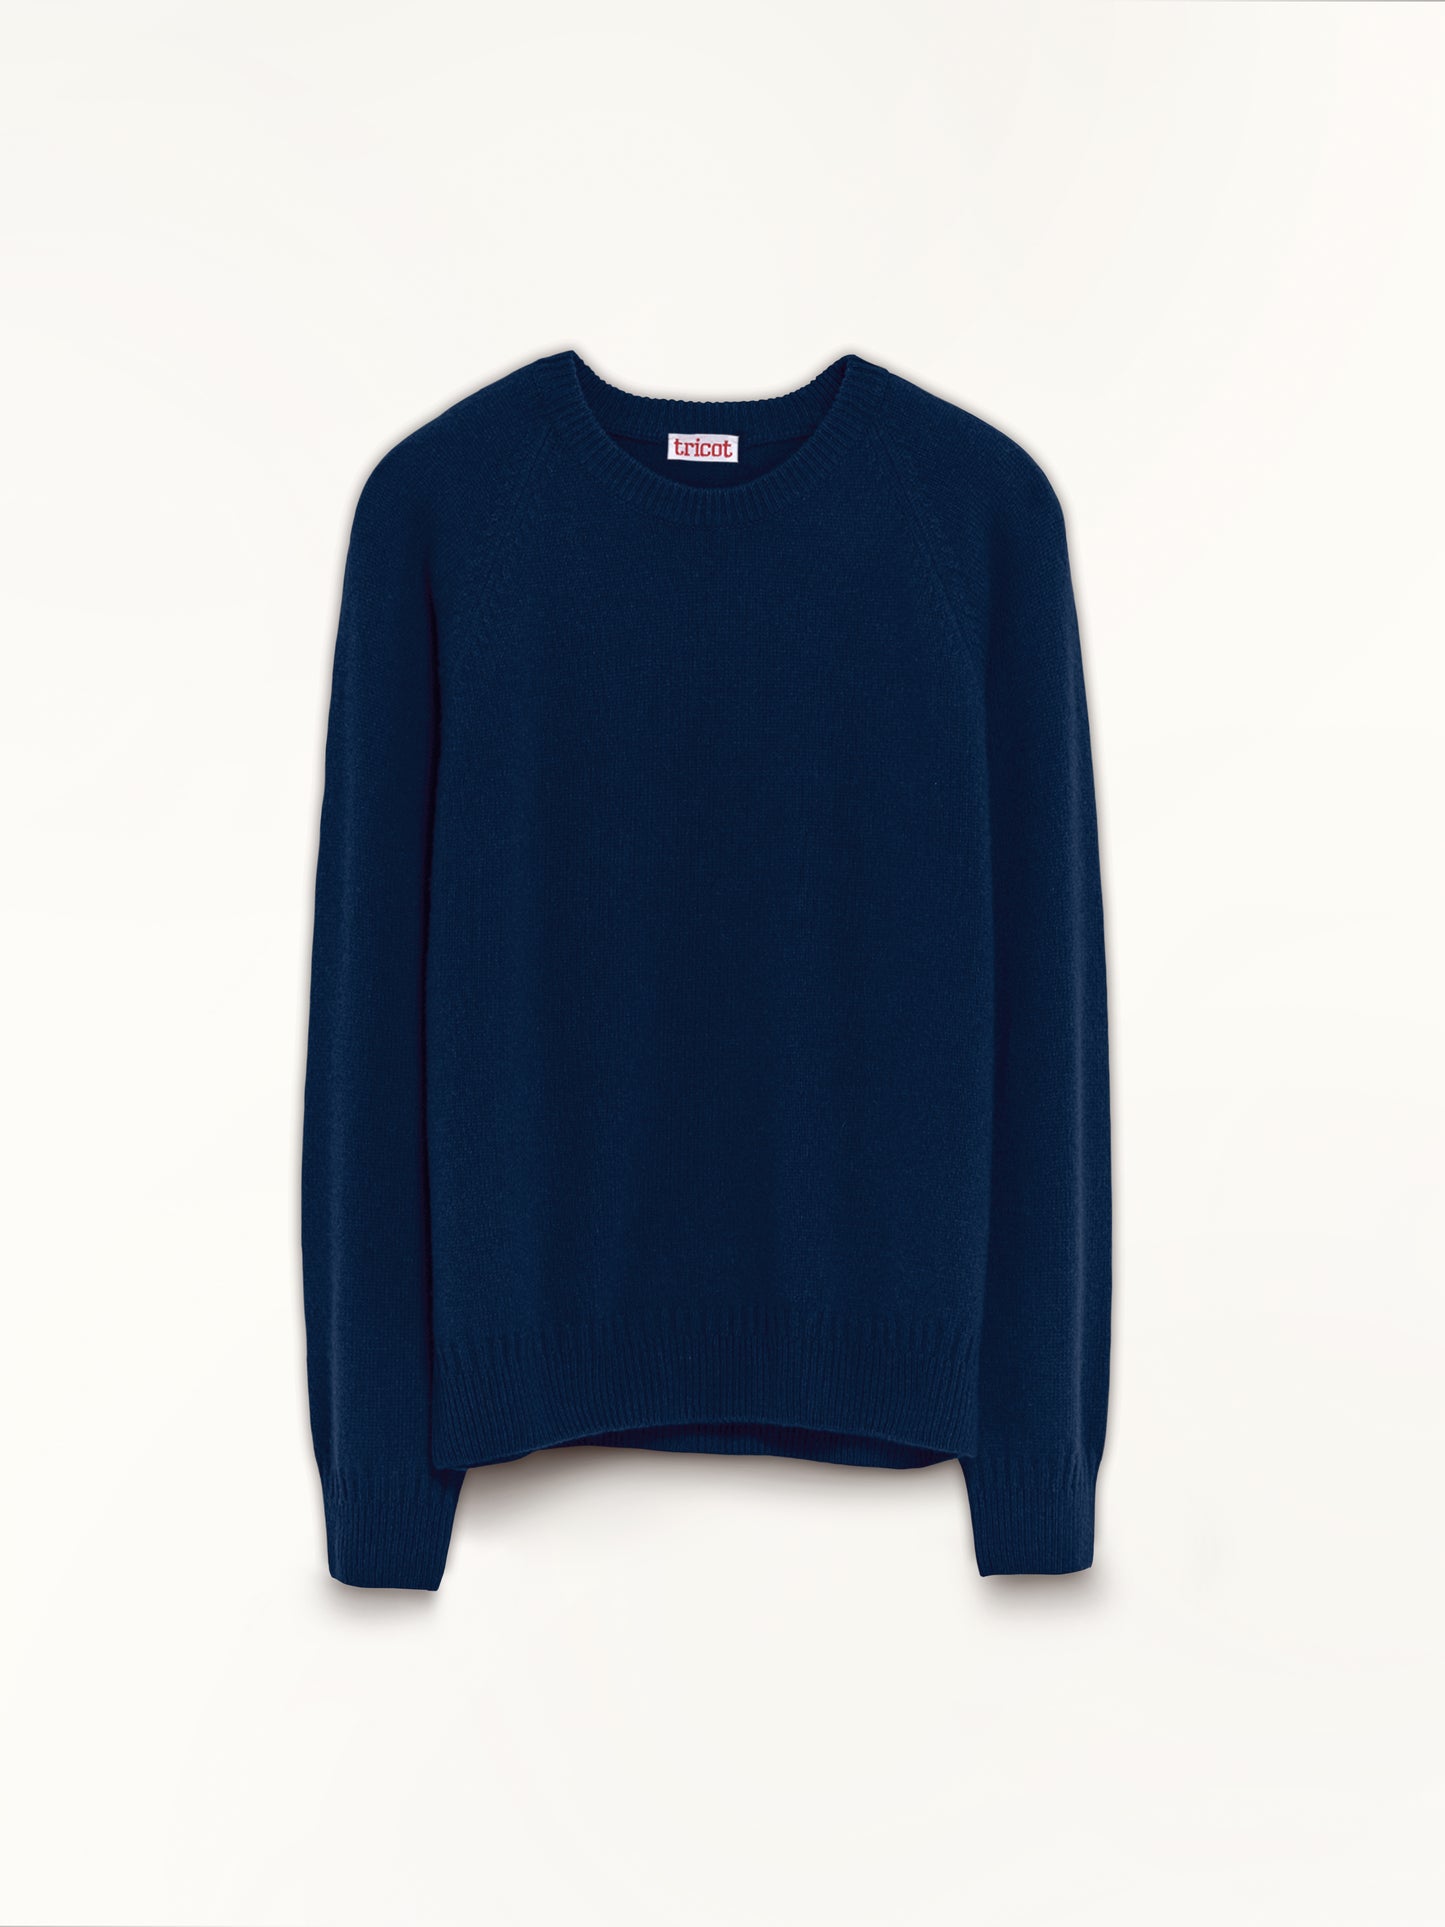 Sweater Crewneck in navy blue Cashmere